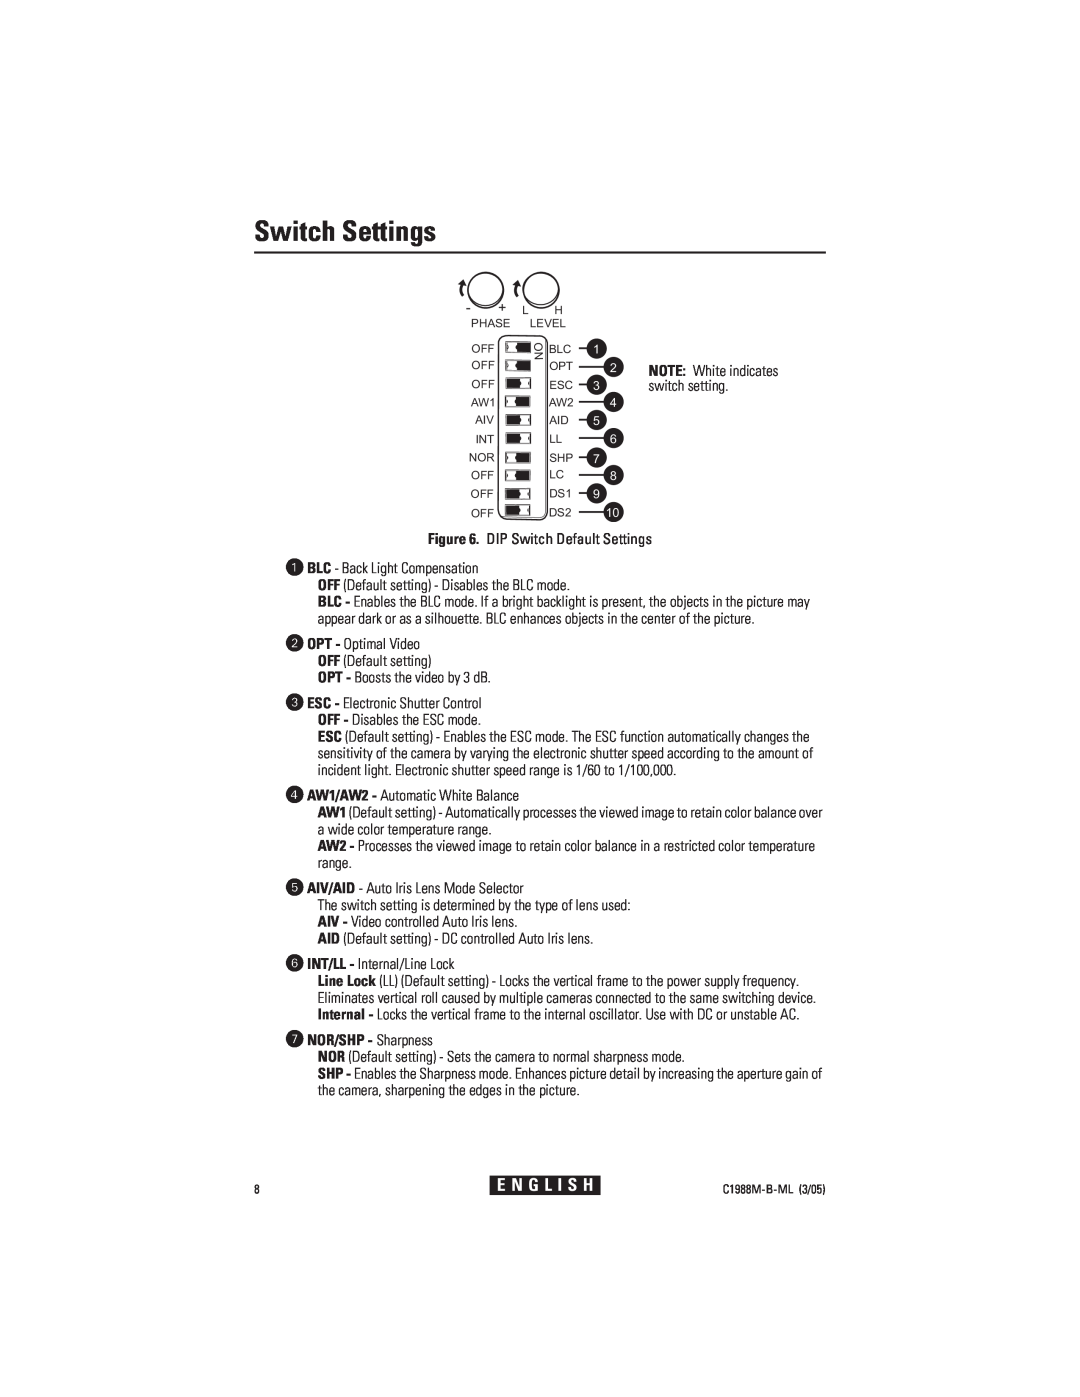 Pelco CC3751H-2 manual Switch Settings, NOR/SHP - Sharpness, E N G L I S H 